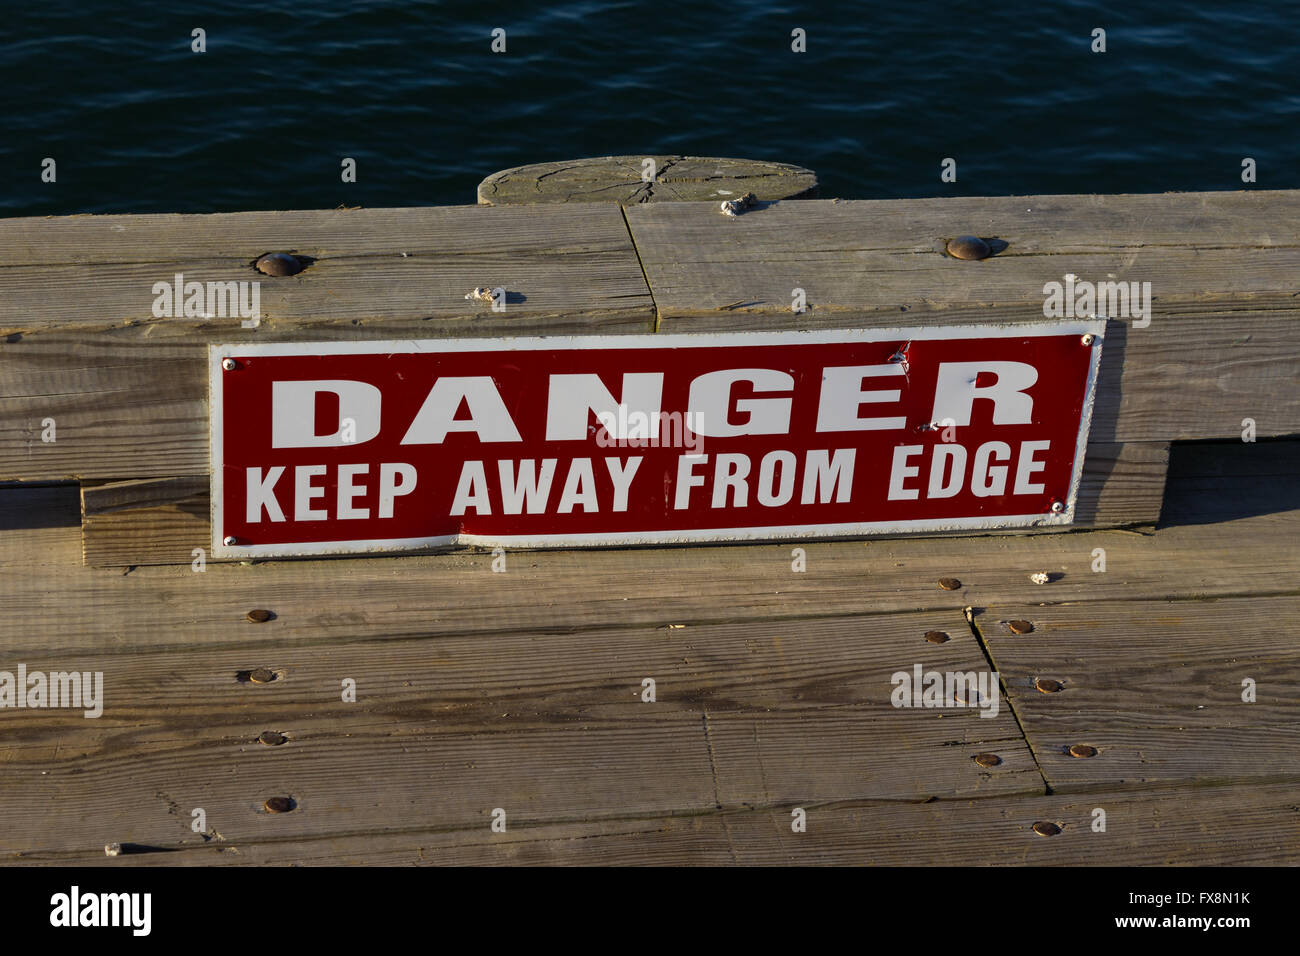 Danger Keep away from edge Stock Photo